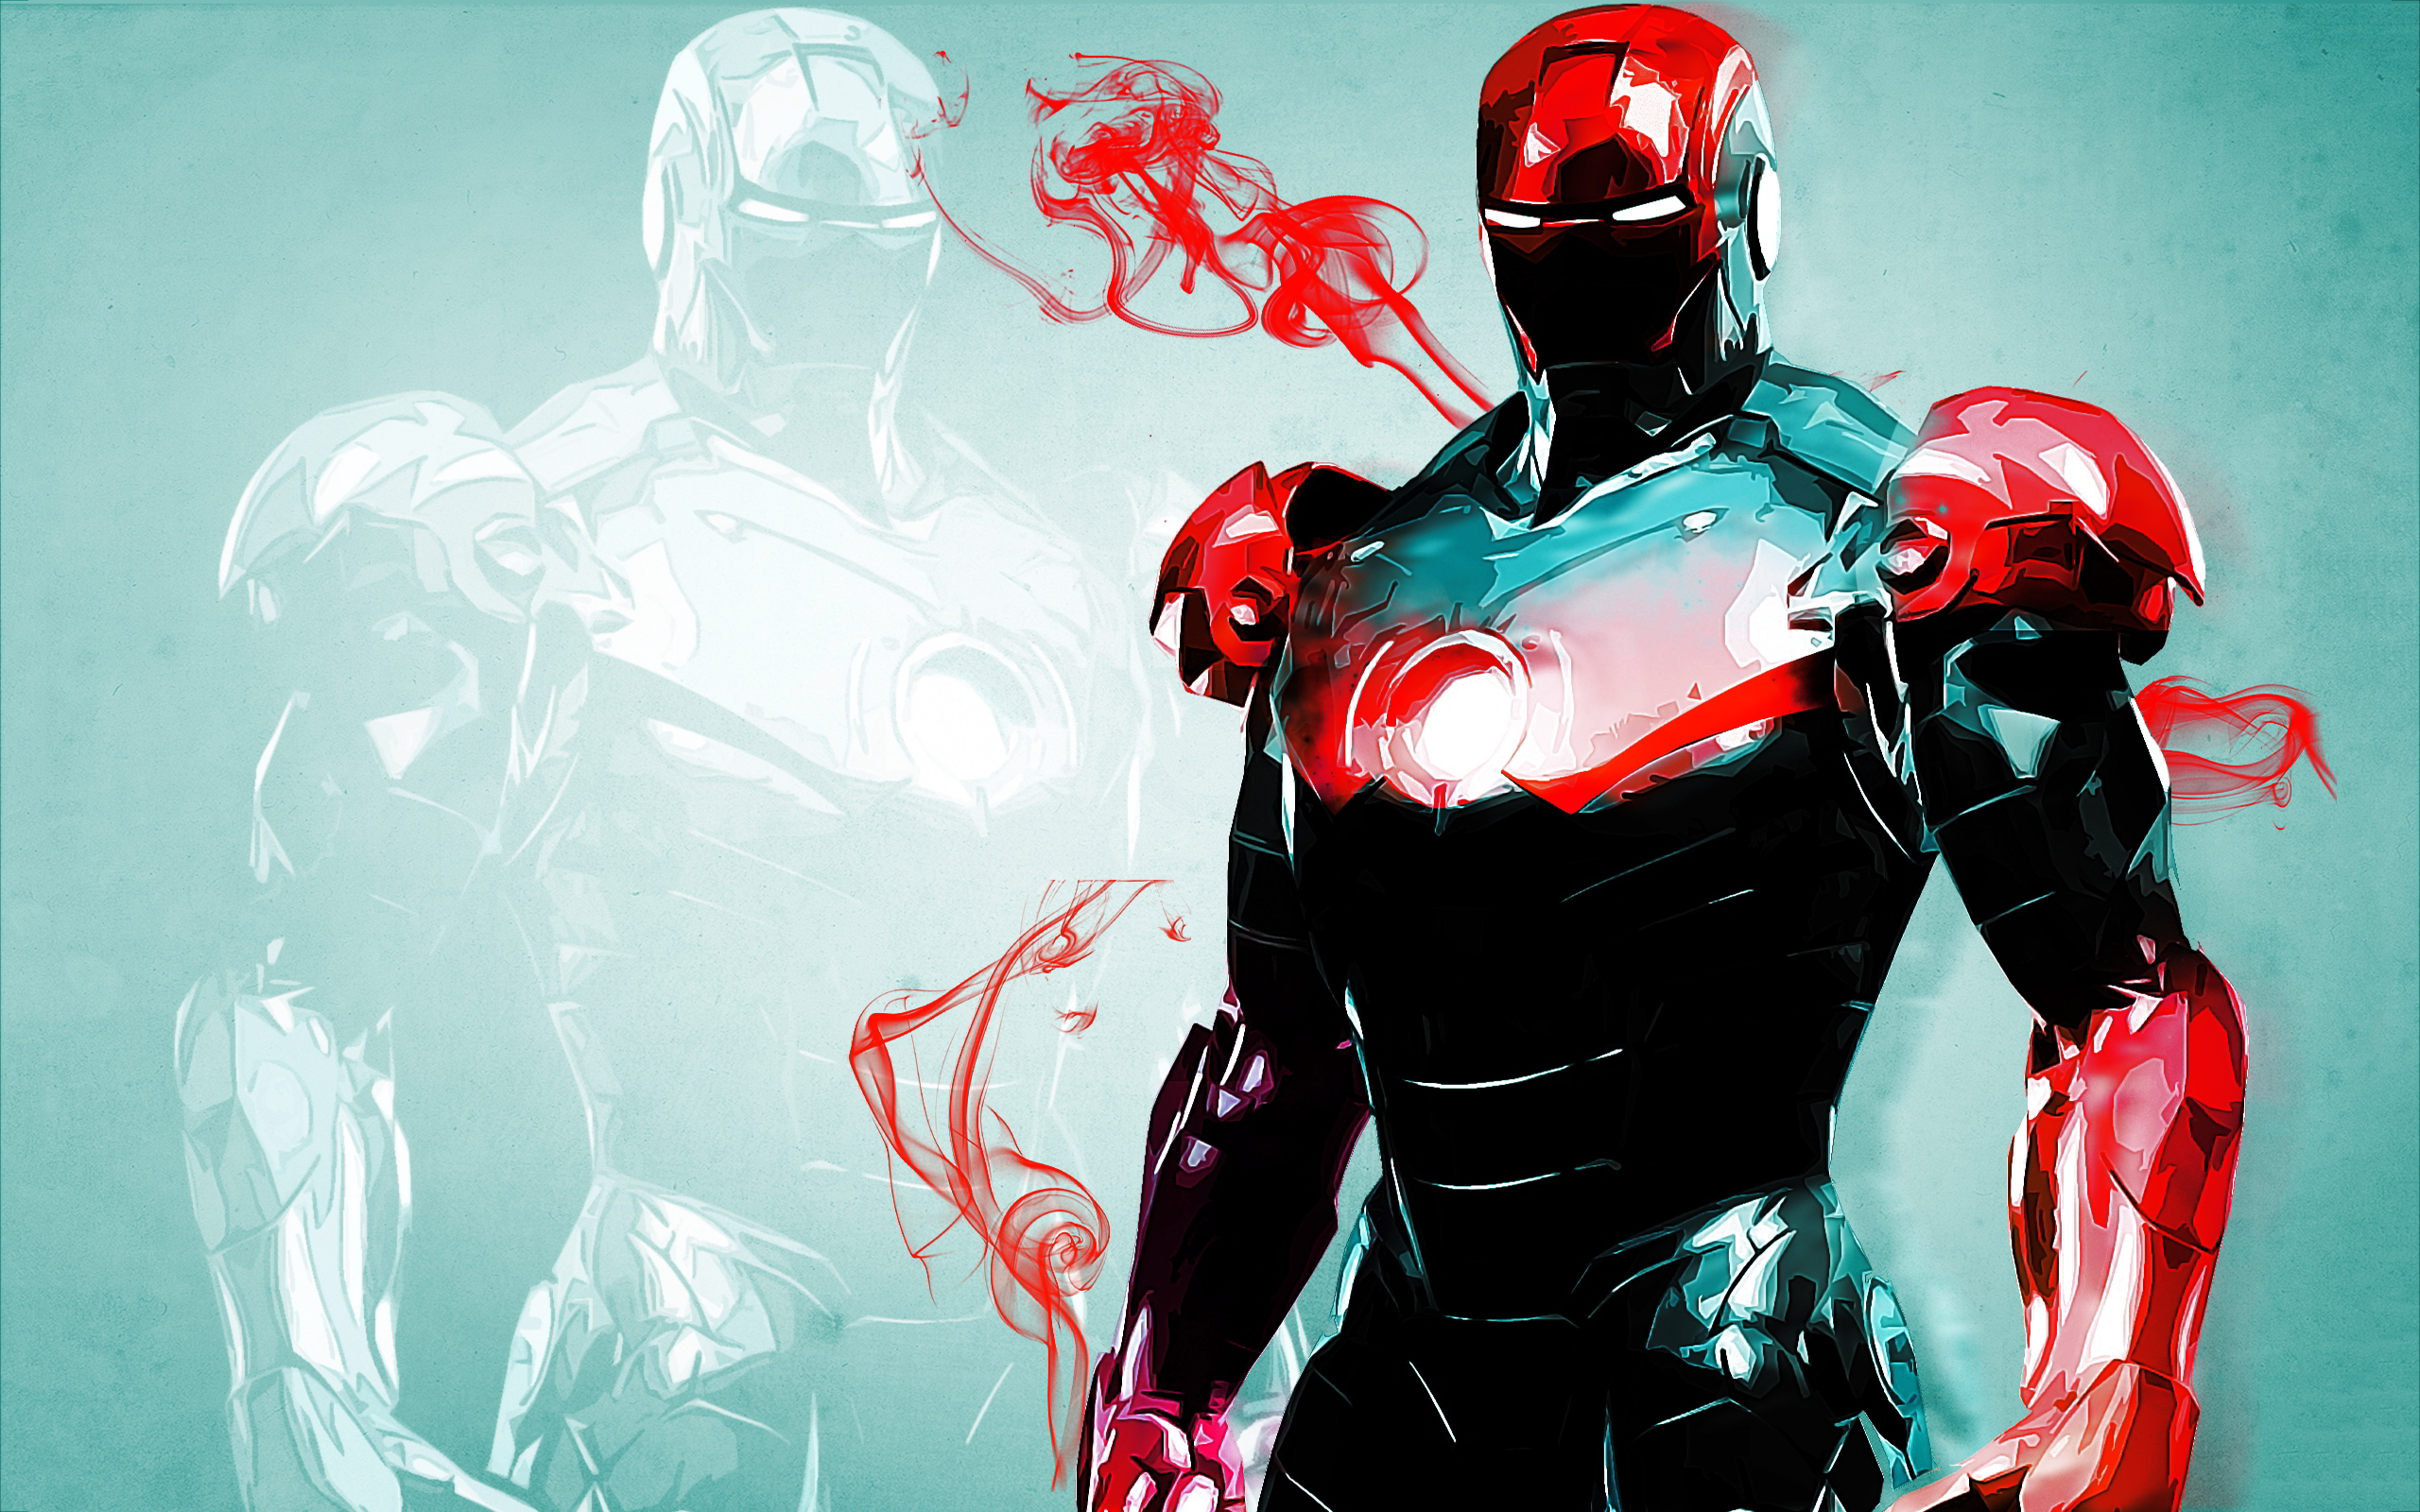 Iron Man Images Free Download | PixelsTalk.Net